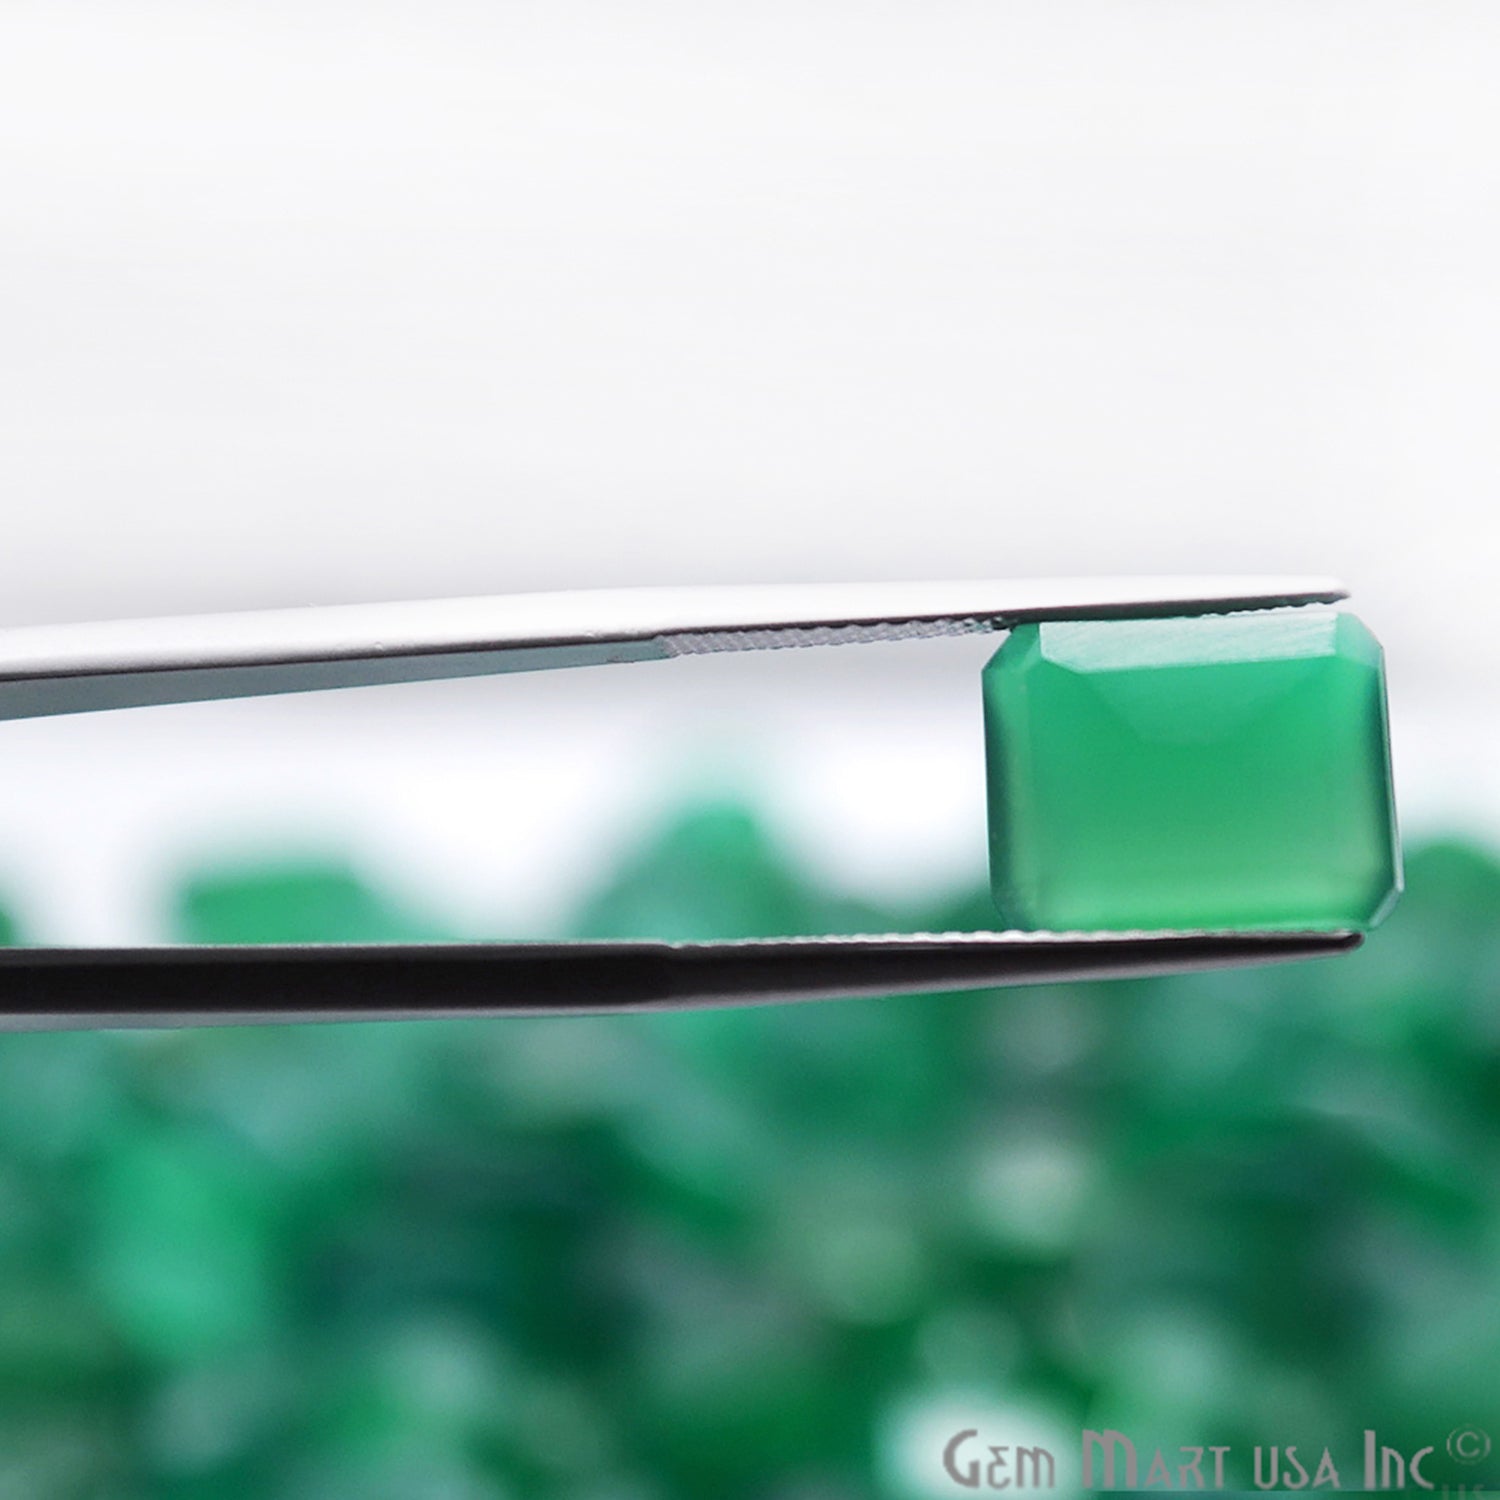 Copy of Green Onyx Mix Shape Wholesale Loose Gemstones - GemMartUSA